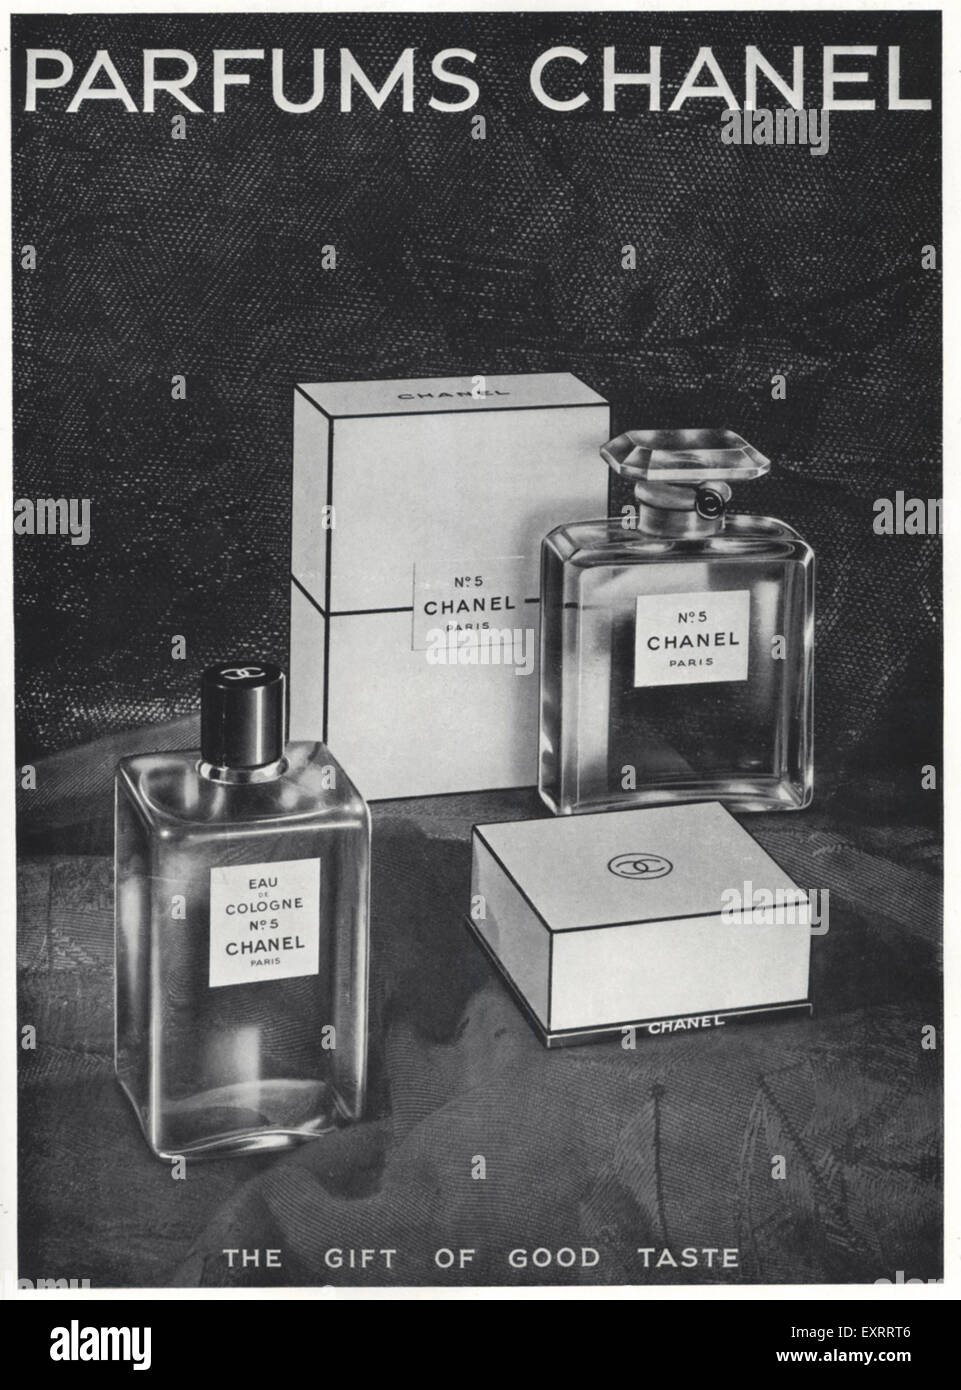 Calandre Paco Rabanne perfume - a fragrance for women 1969